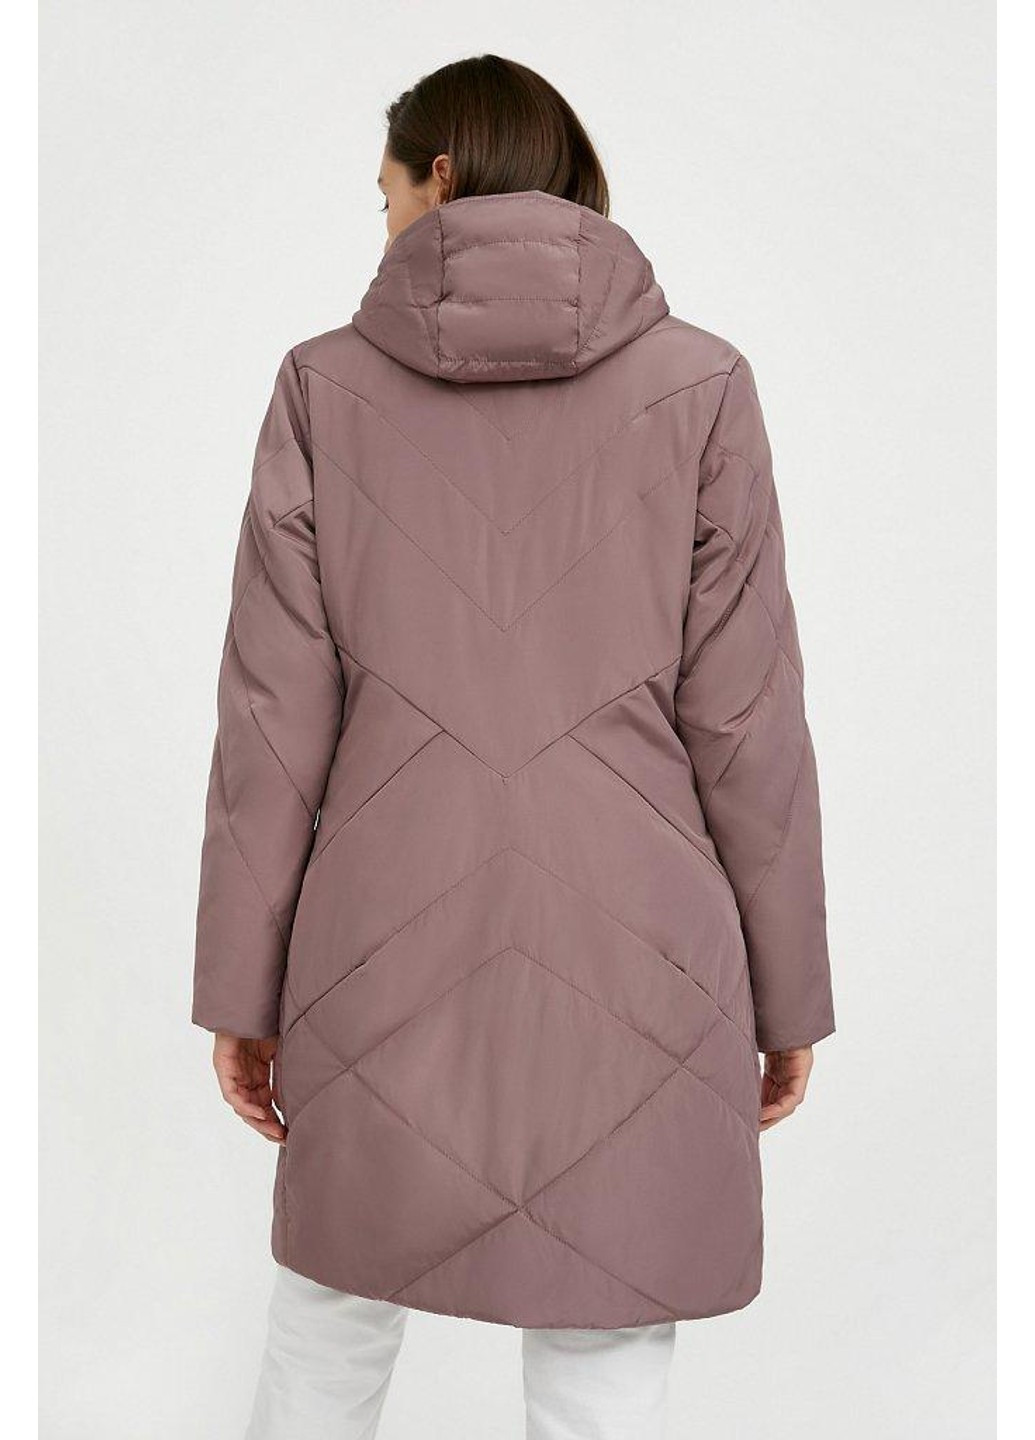 Розовая демисезонная длинная женская куртка a20-11007-823 темно-розовая l Finn Flare